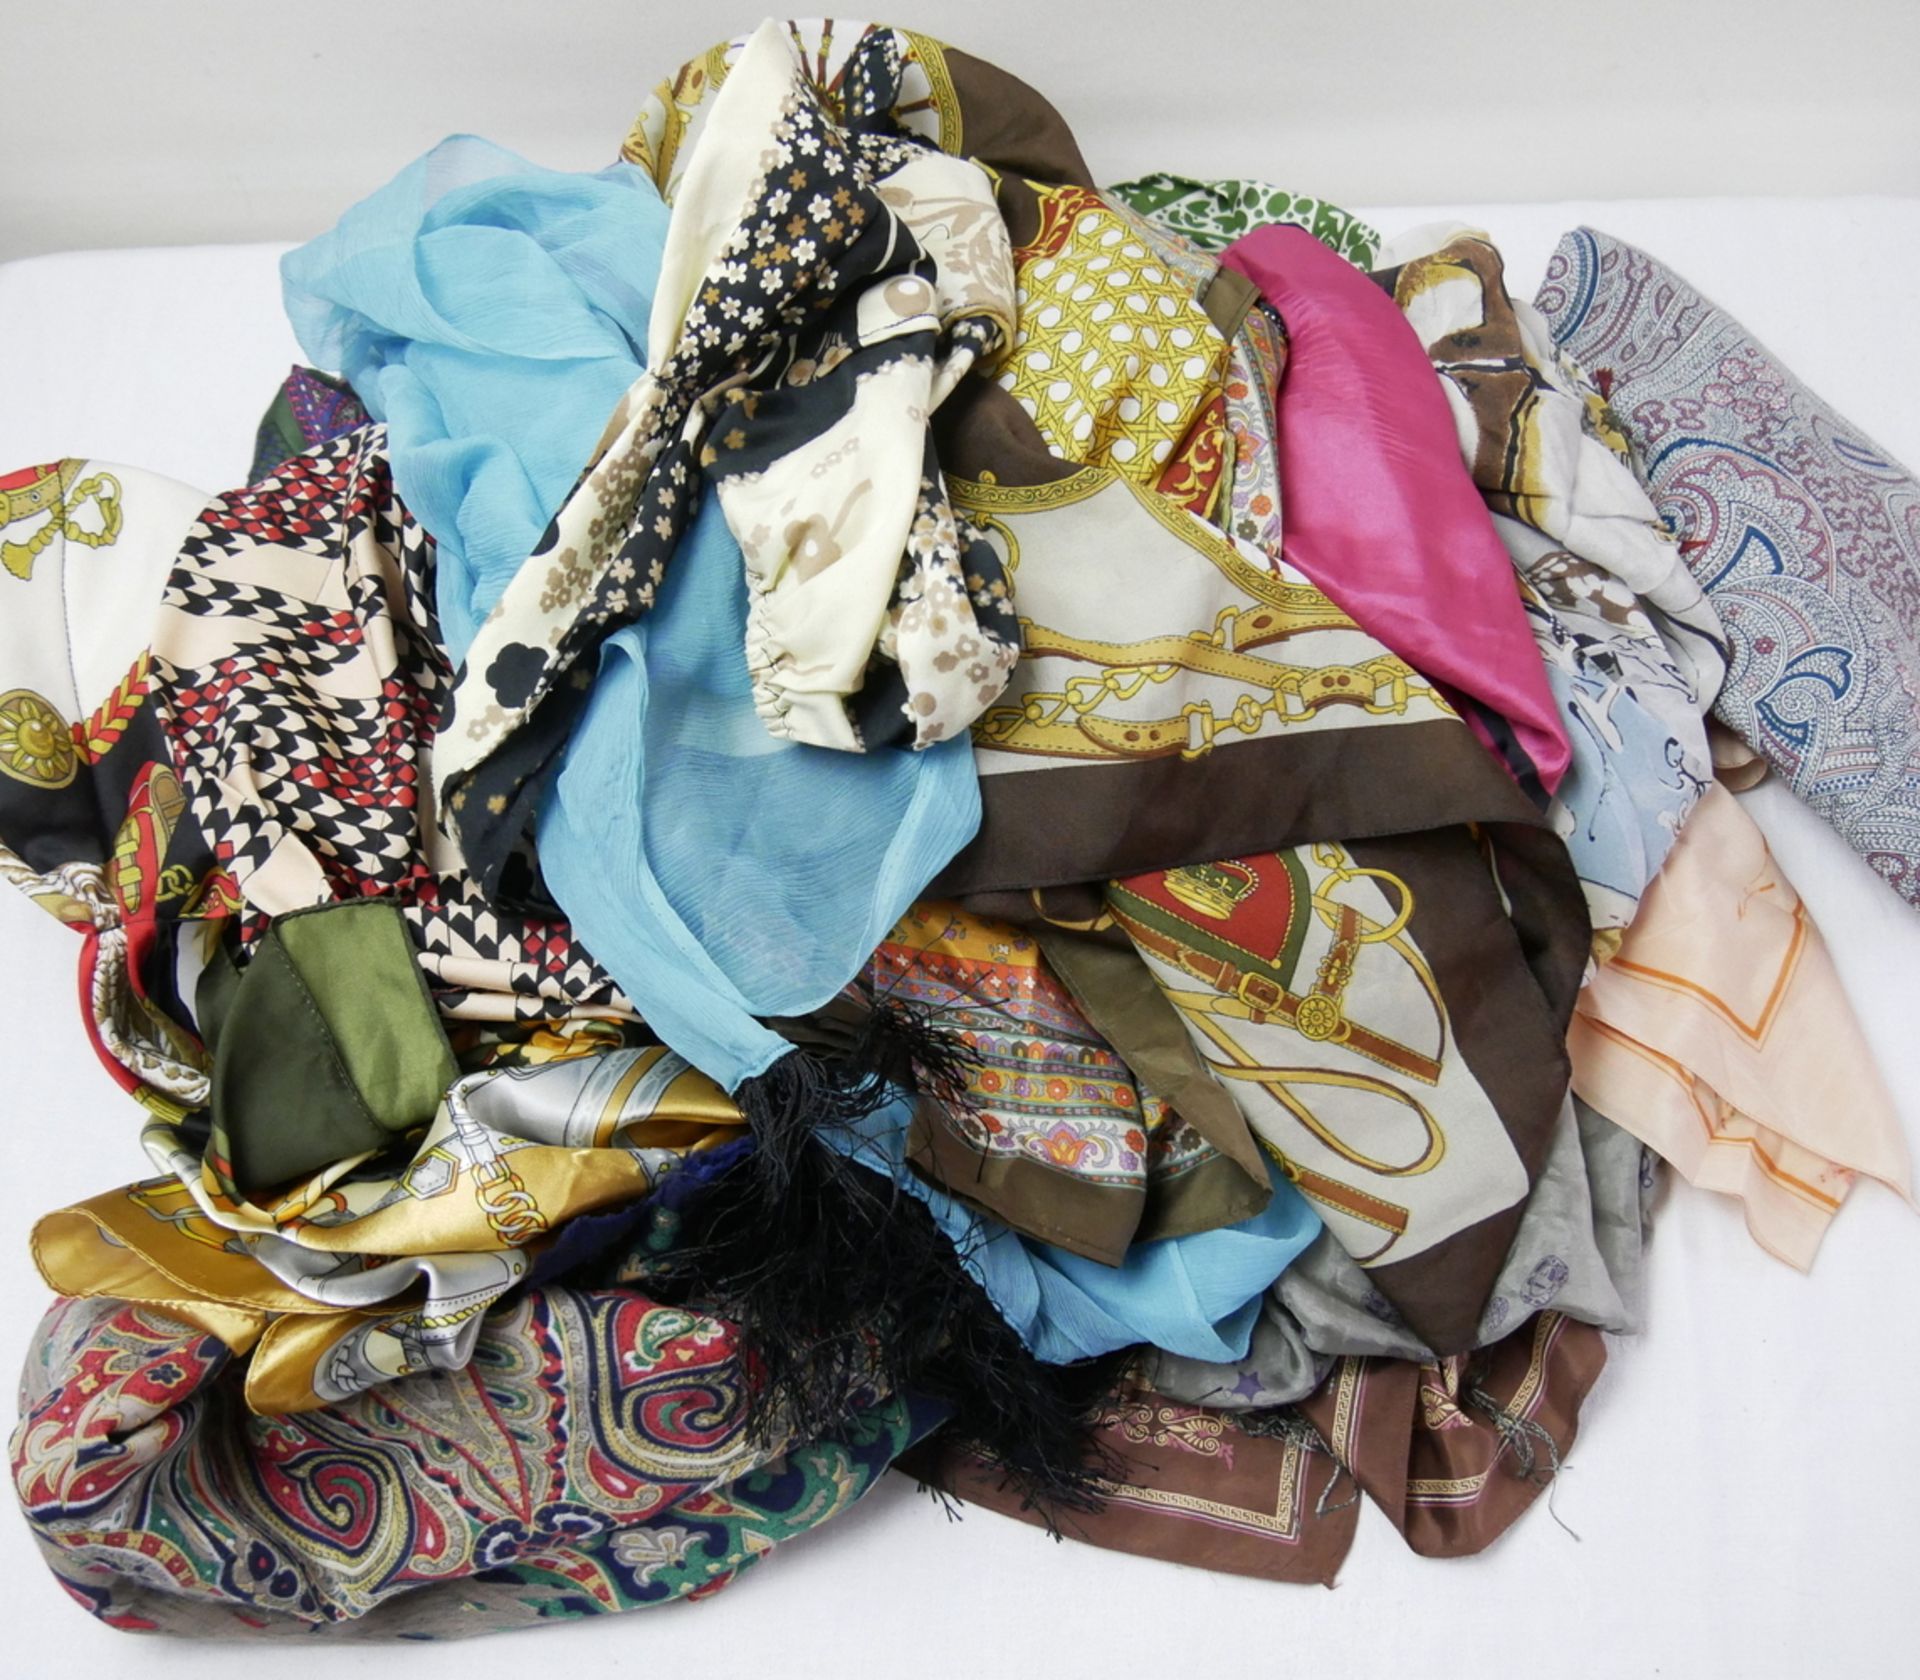 Lot Tücher / Schals insgesamt 21 Stück, verschiedene Modelle sowie 5 Kopftücher. Bitte besichtigen